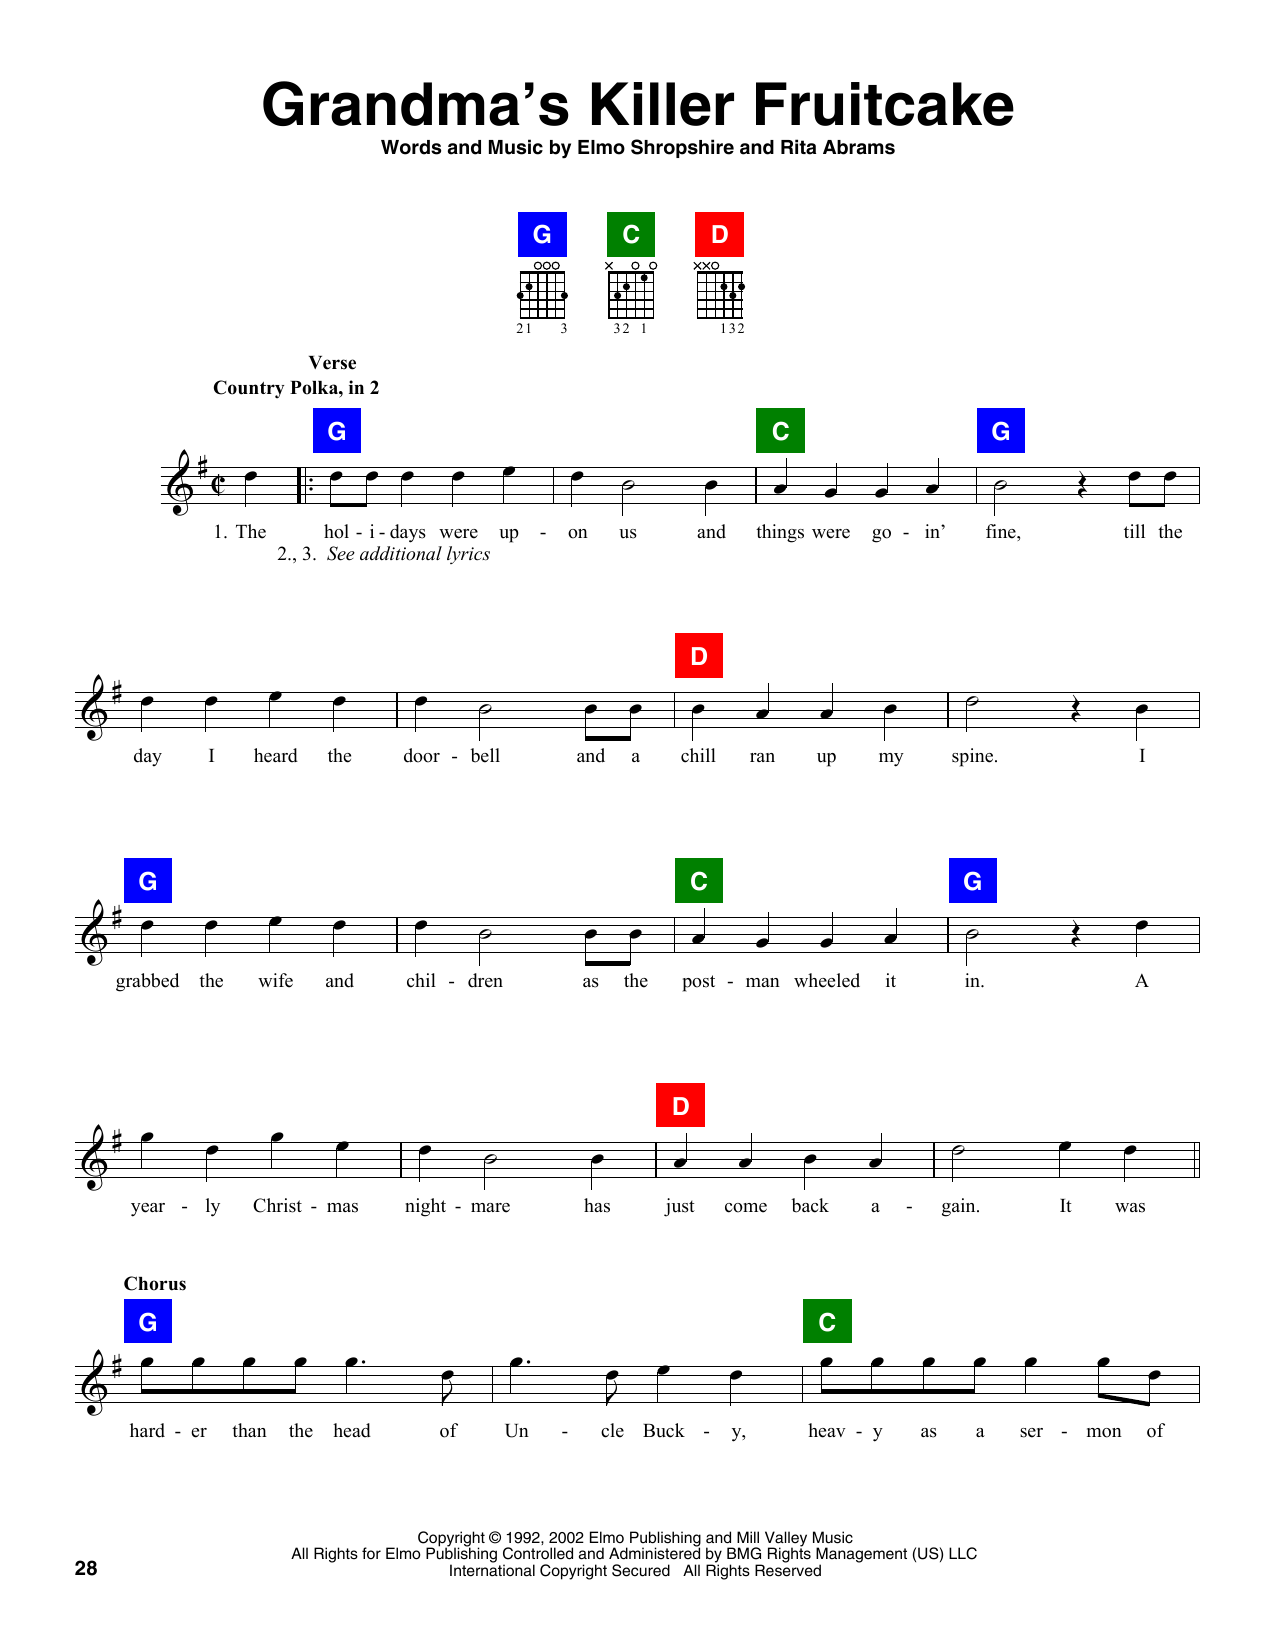 Elmo Shropshire Grandma's Killer Fruitcake Sheet Music Notes & Chords for Trombone - Download or Print PDF